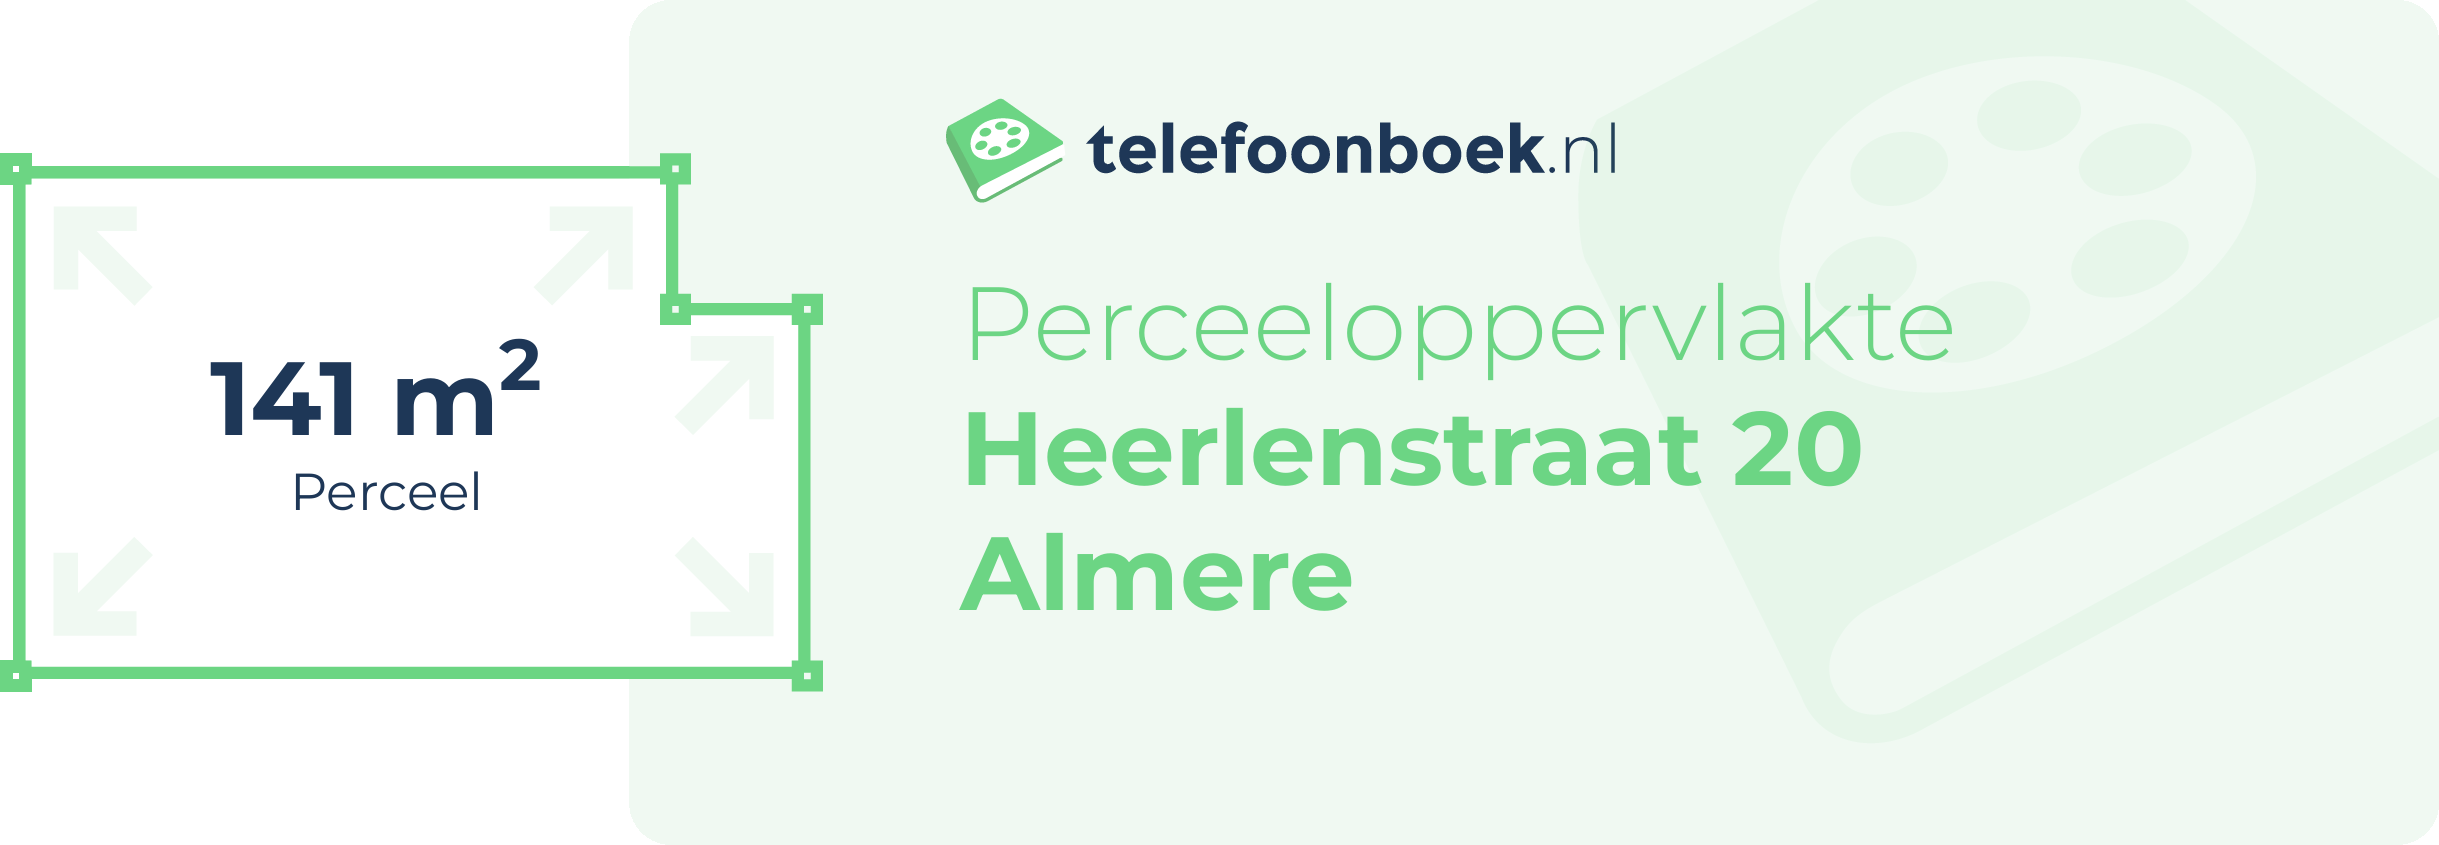 Perceeloppervlakte Heerlenstraat 20 Almere